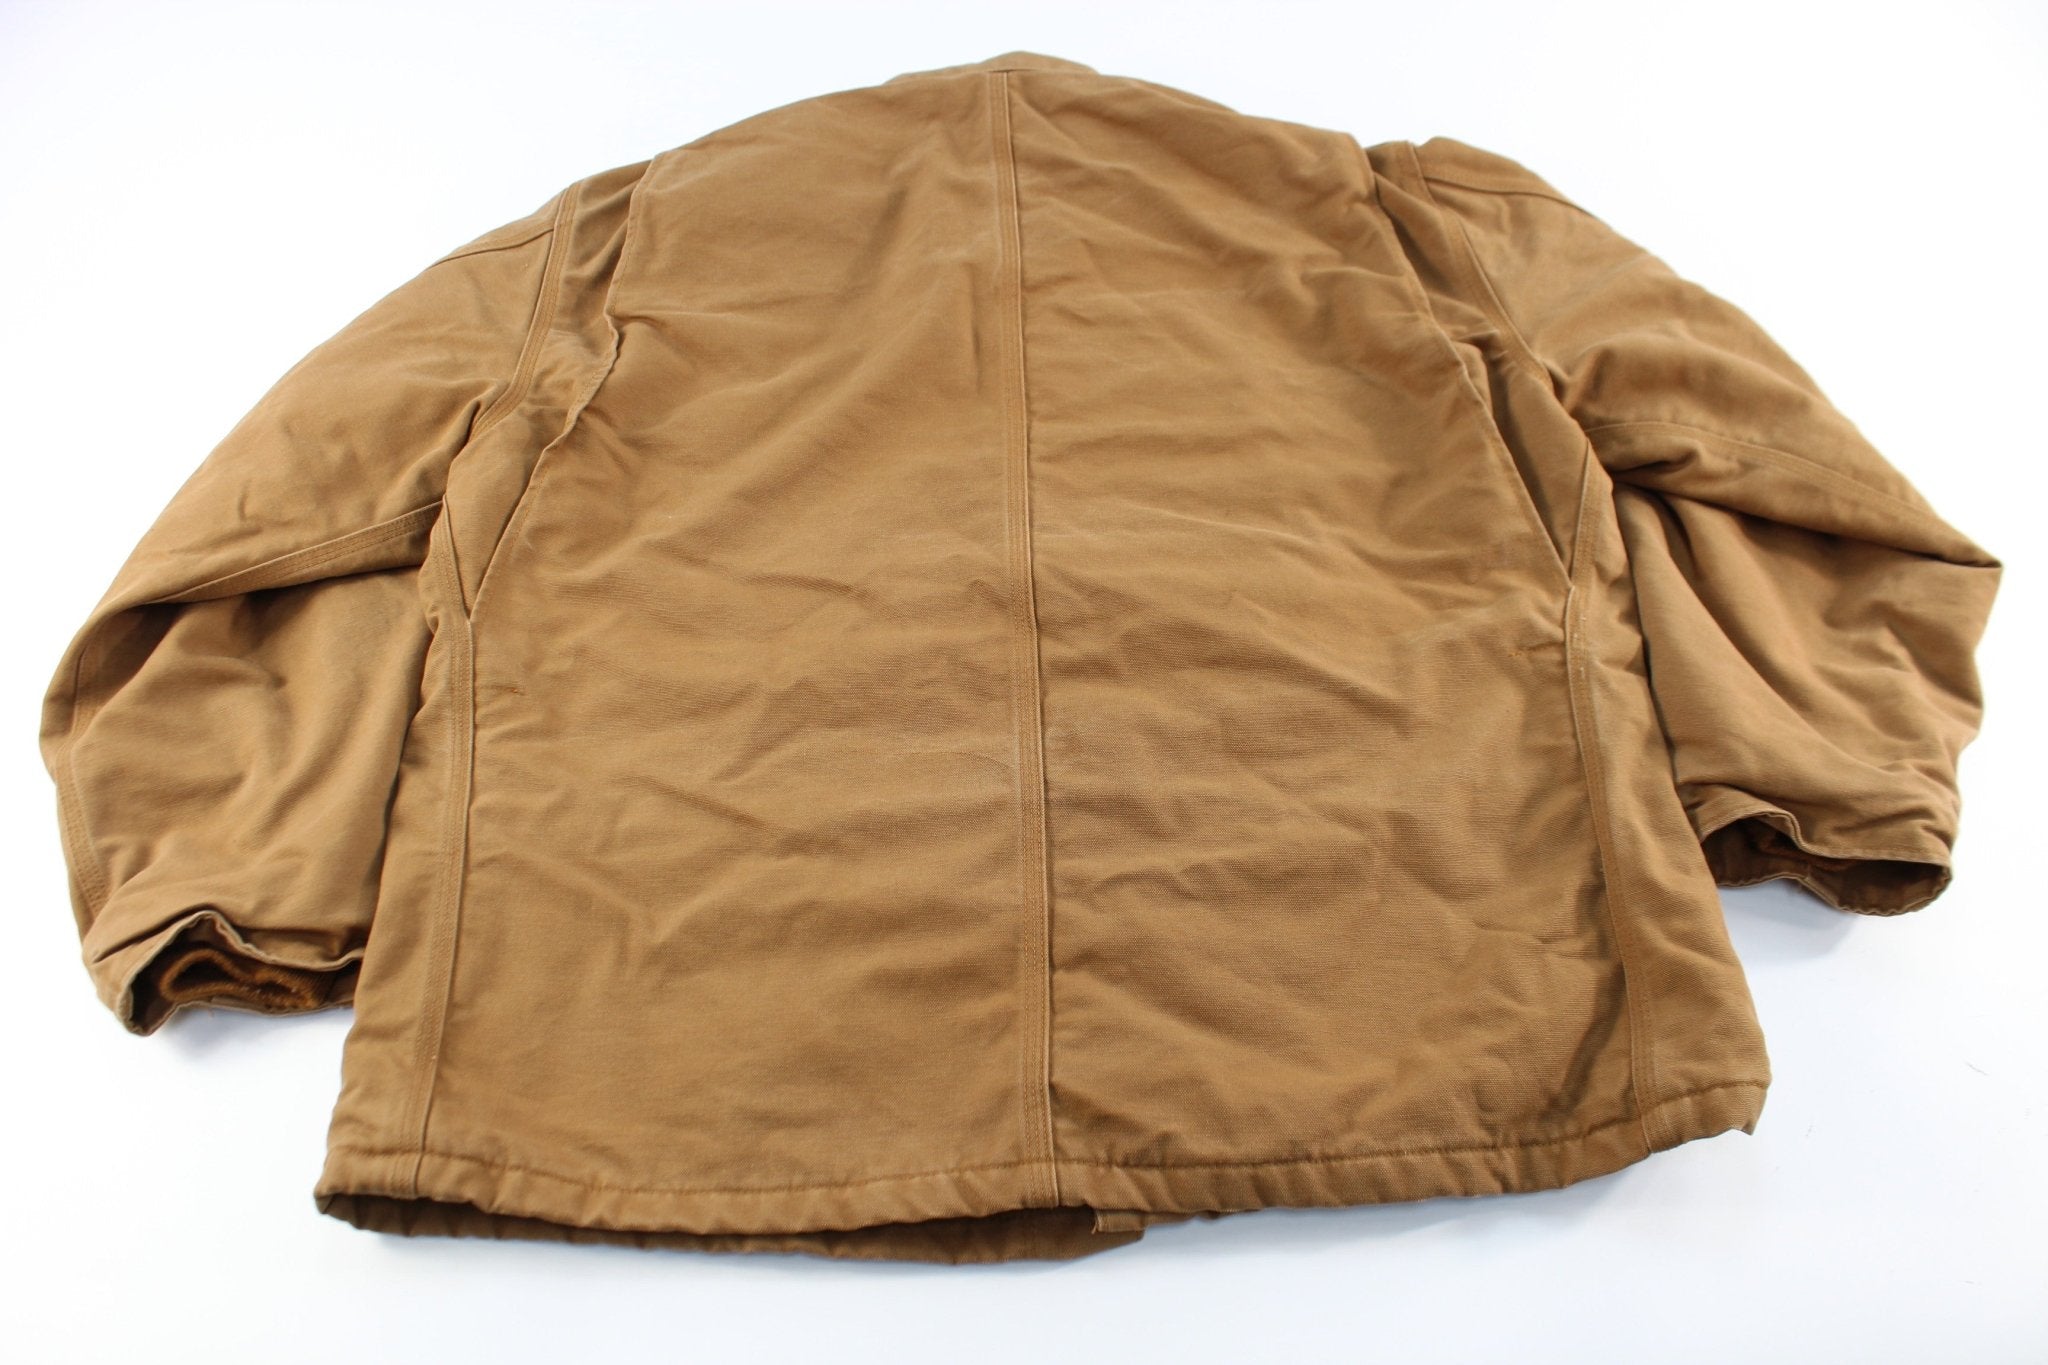 Carhartt Flame Resistant Tan Arctic Traditional Zip Up Jacket